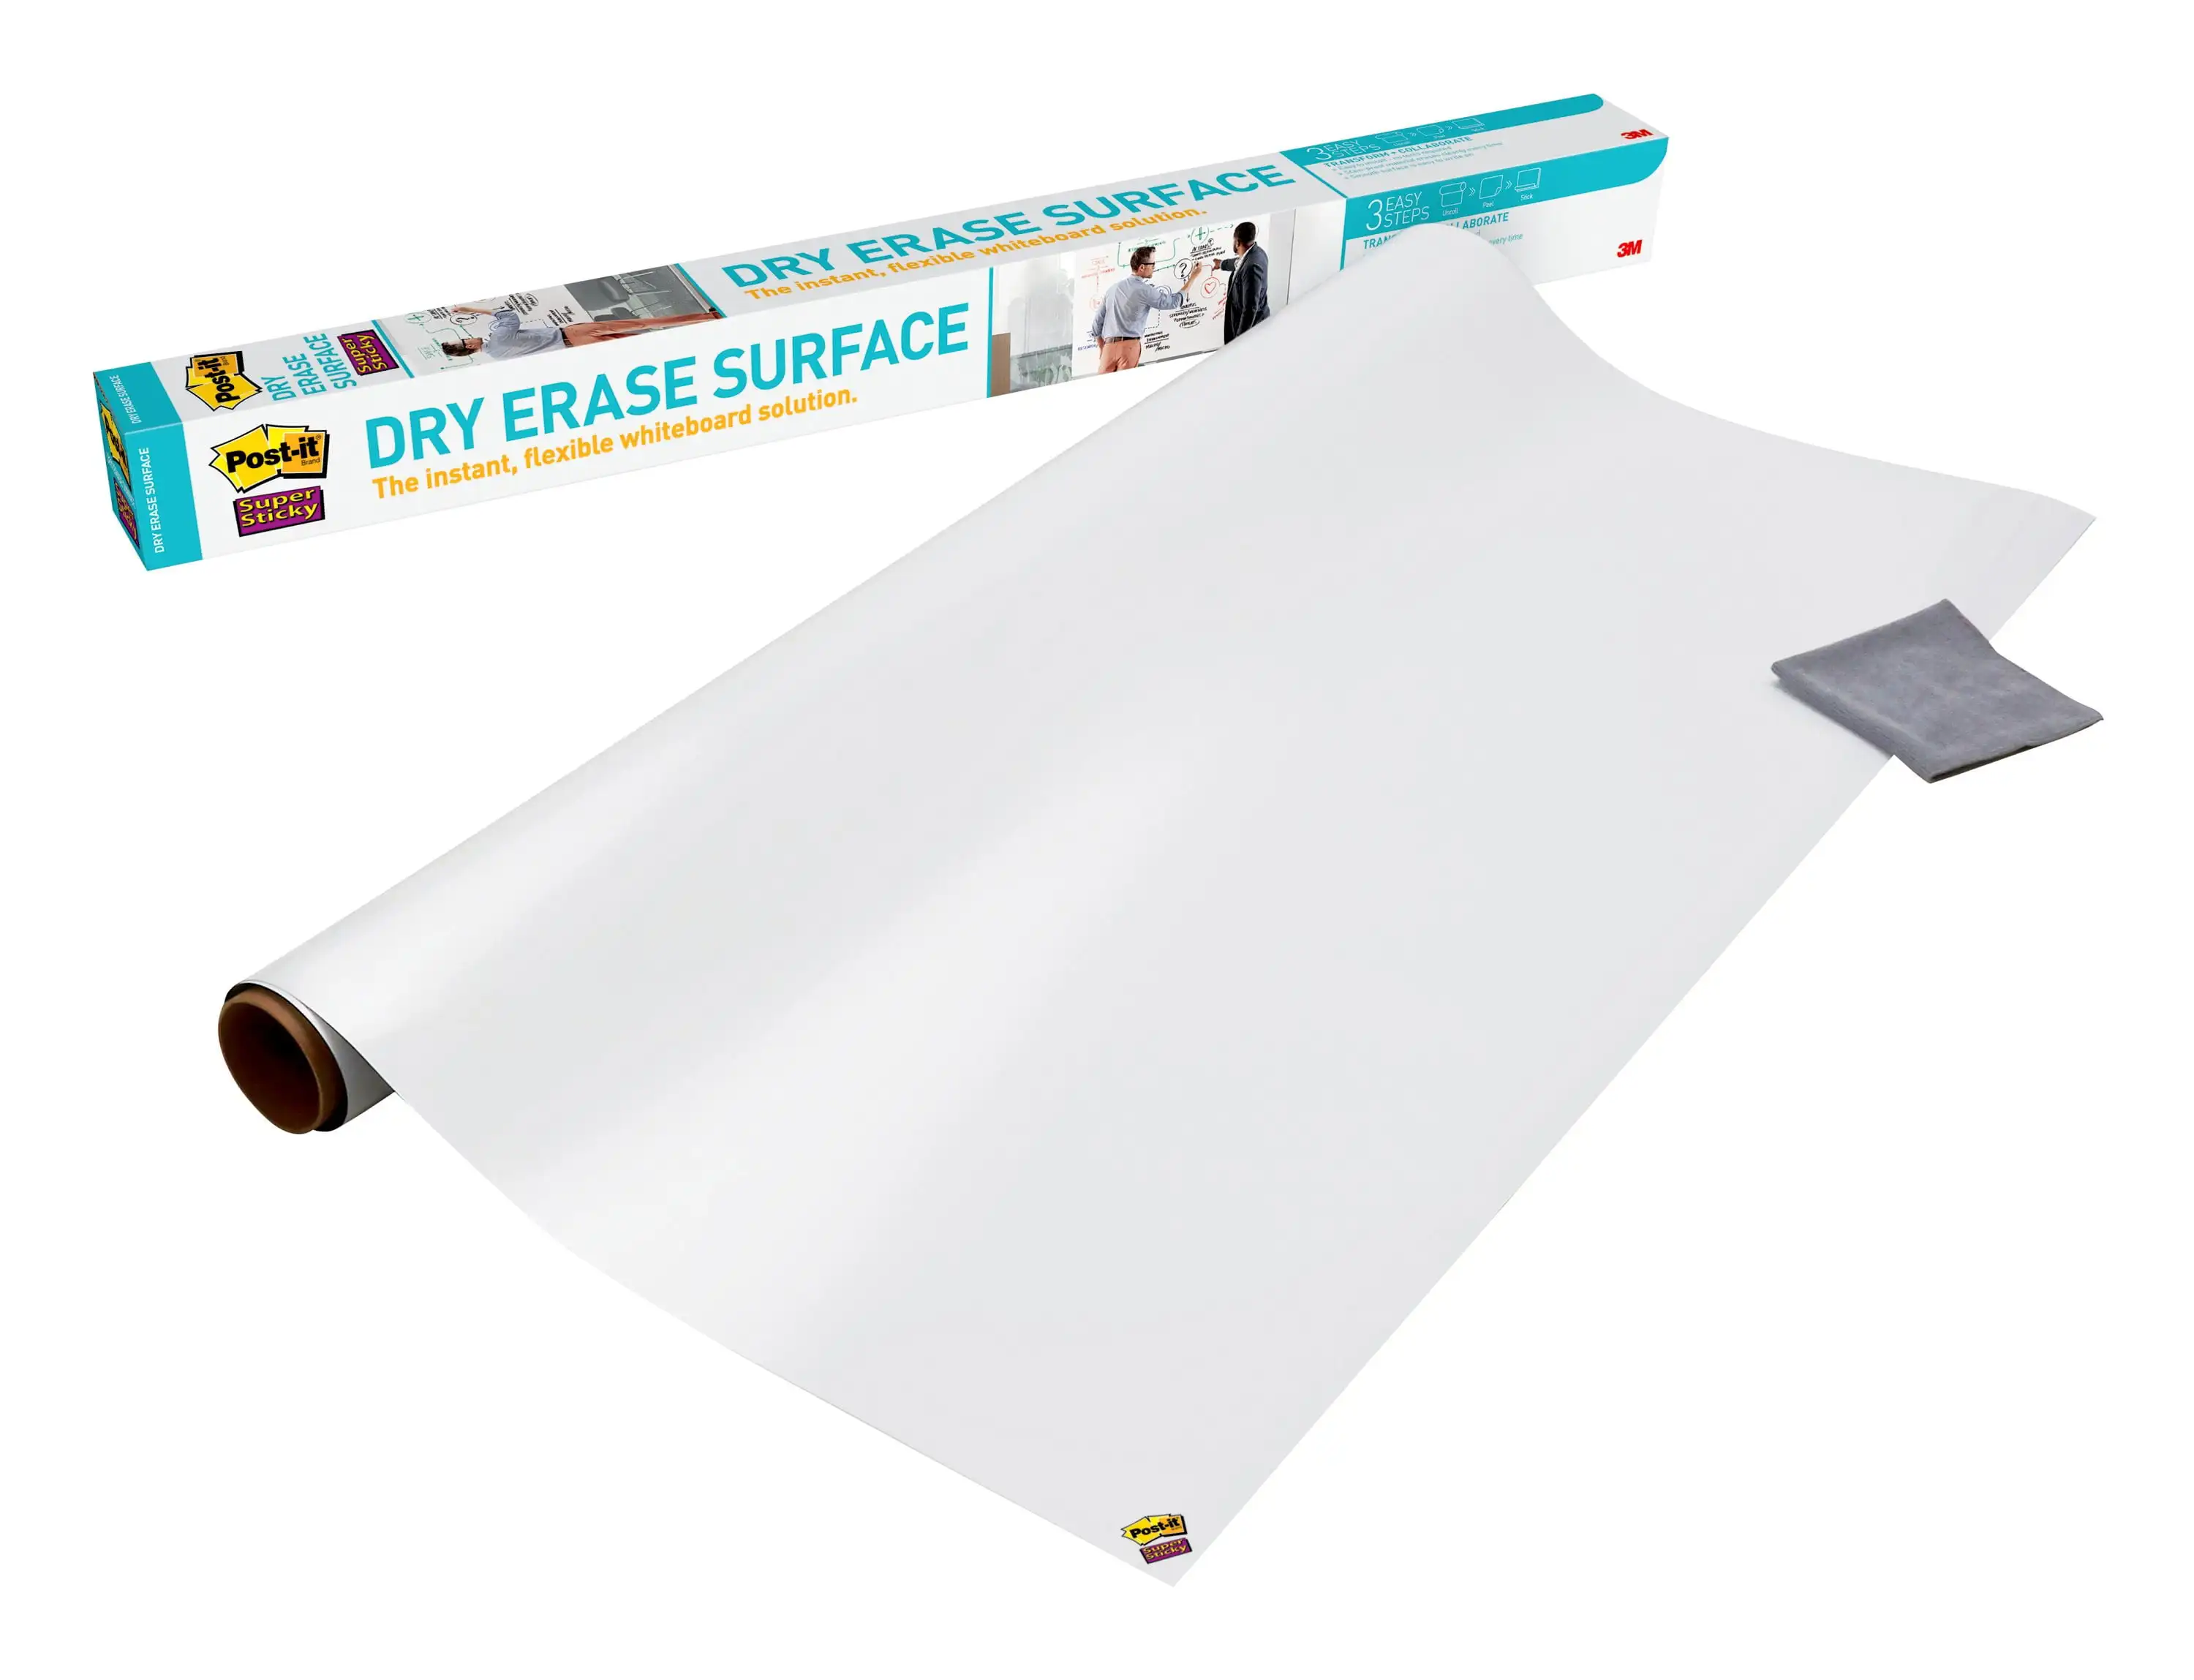 Dry Super Sticky Self-Stick Dry Erase Surface Film, White, 8 ft. x 4 ft.